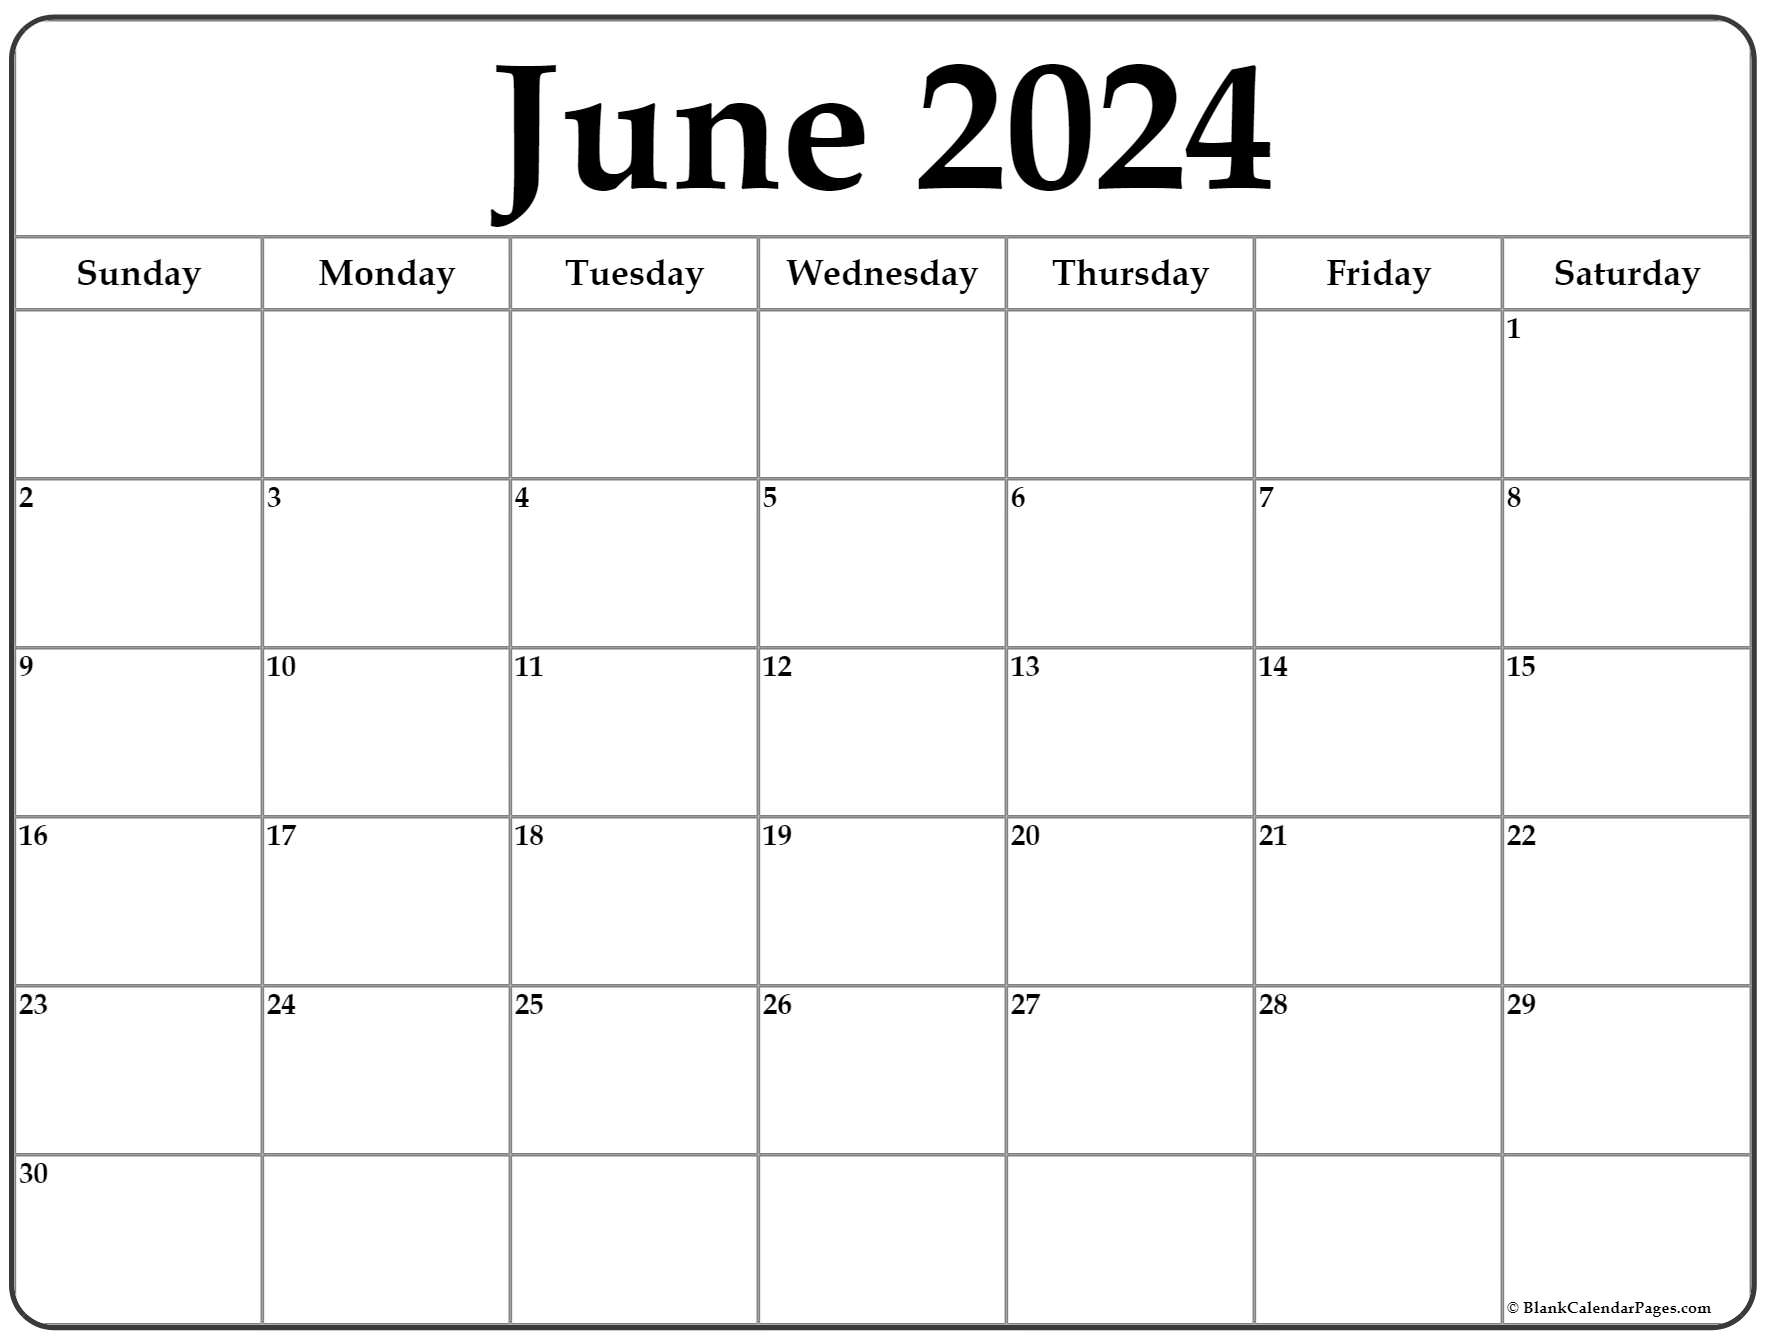 Monthly Calendar June 2022 June 2022 Calendar | Free Printable Calendar Templates